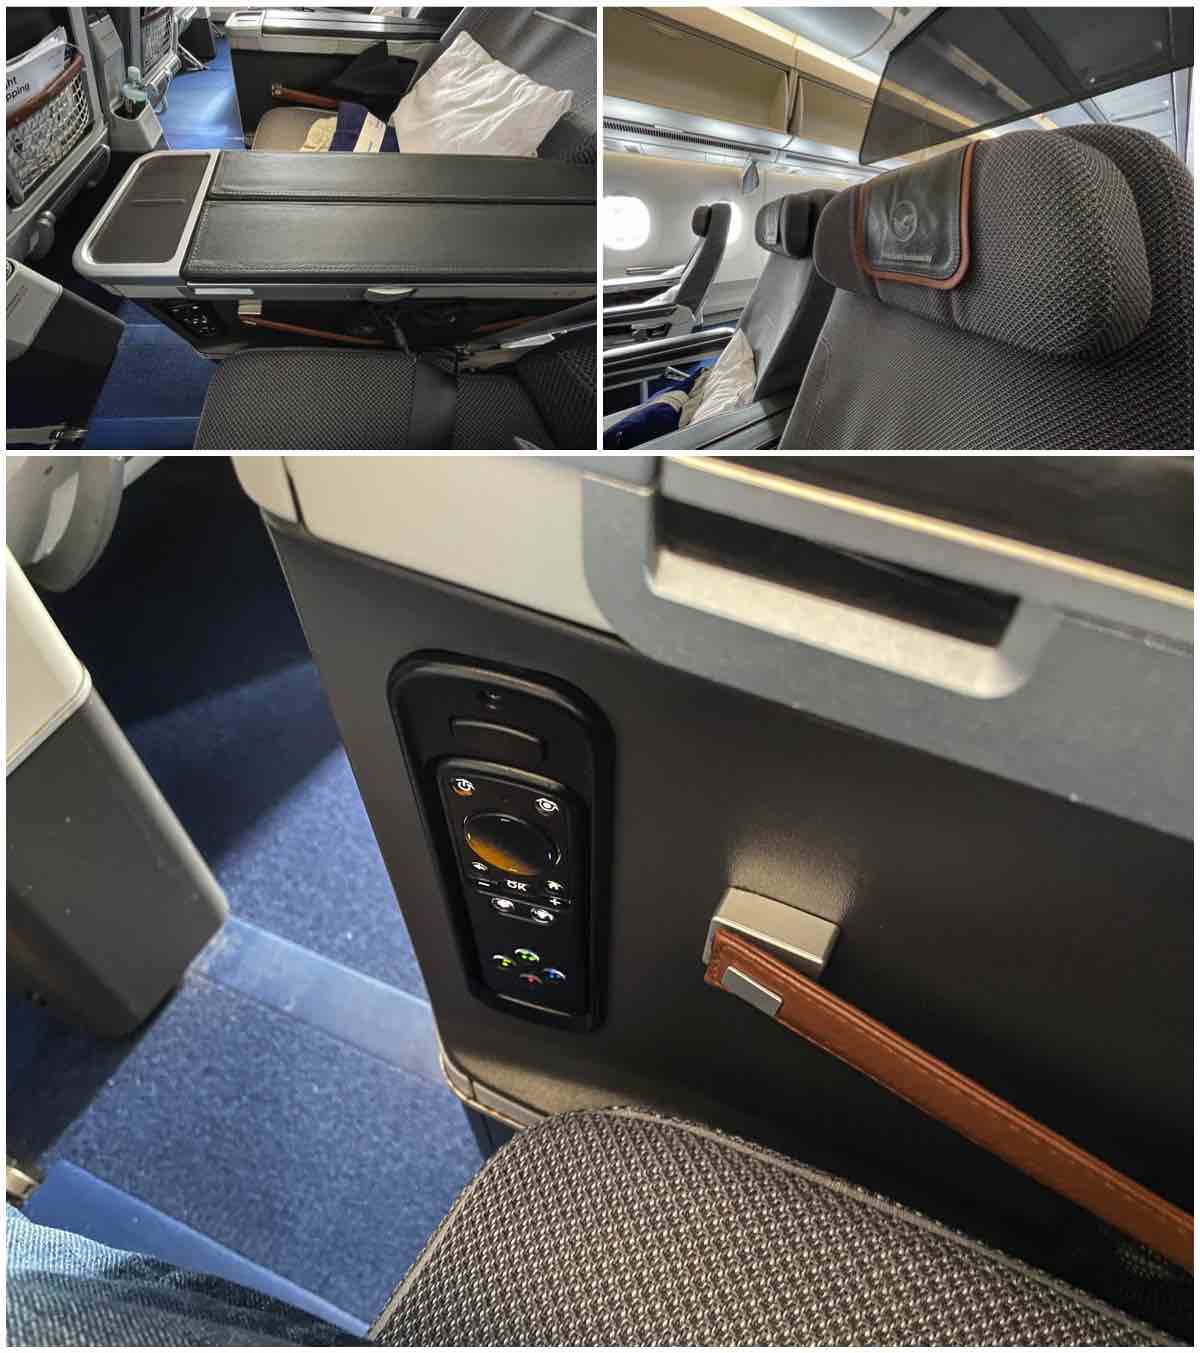 Lufthansa a350-900 premium economy seat details 